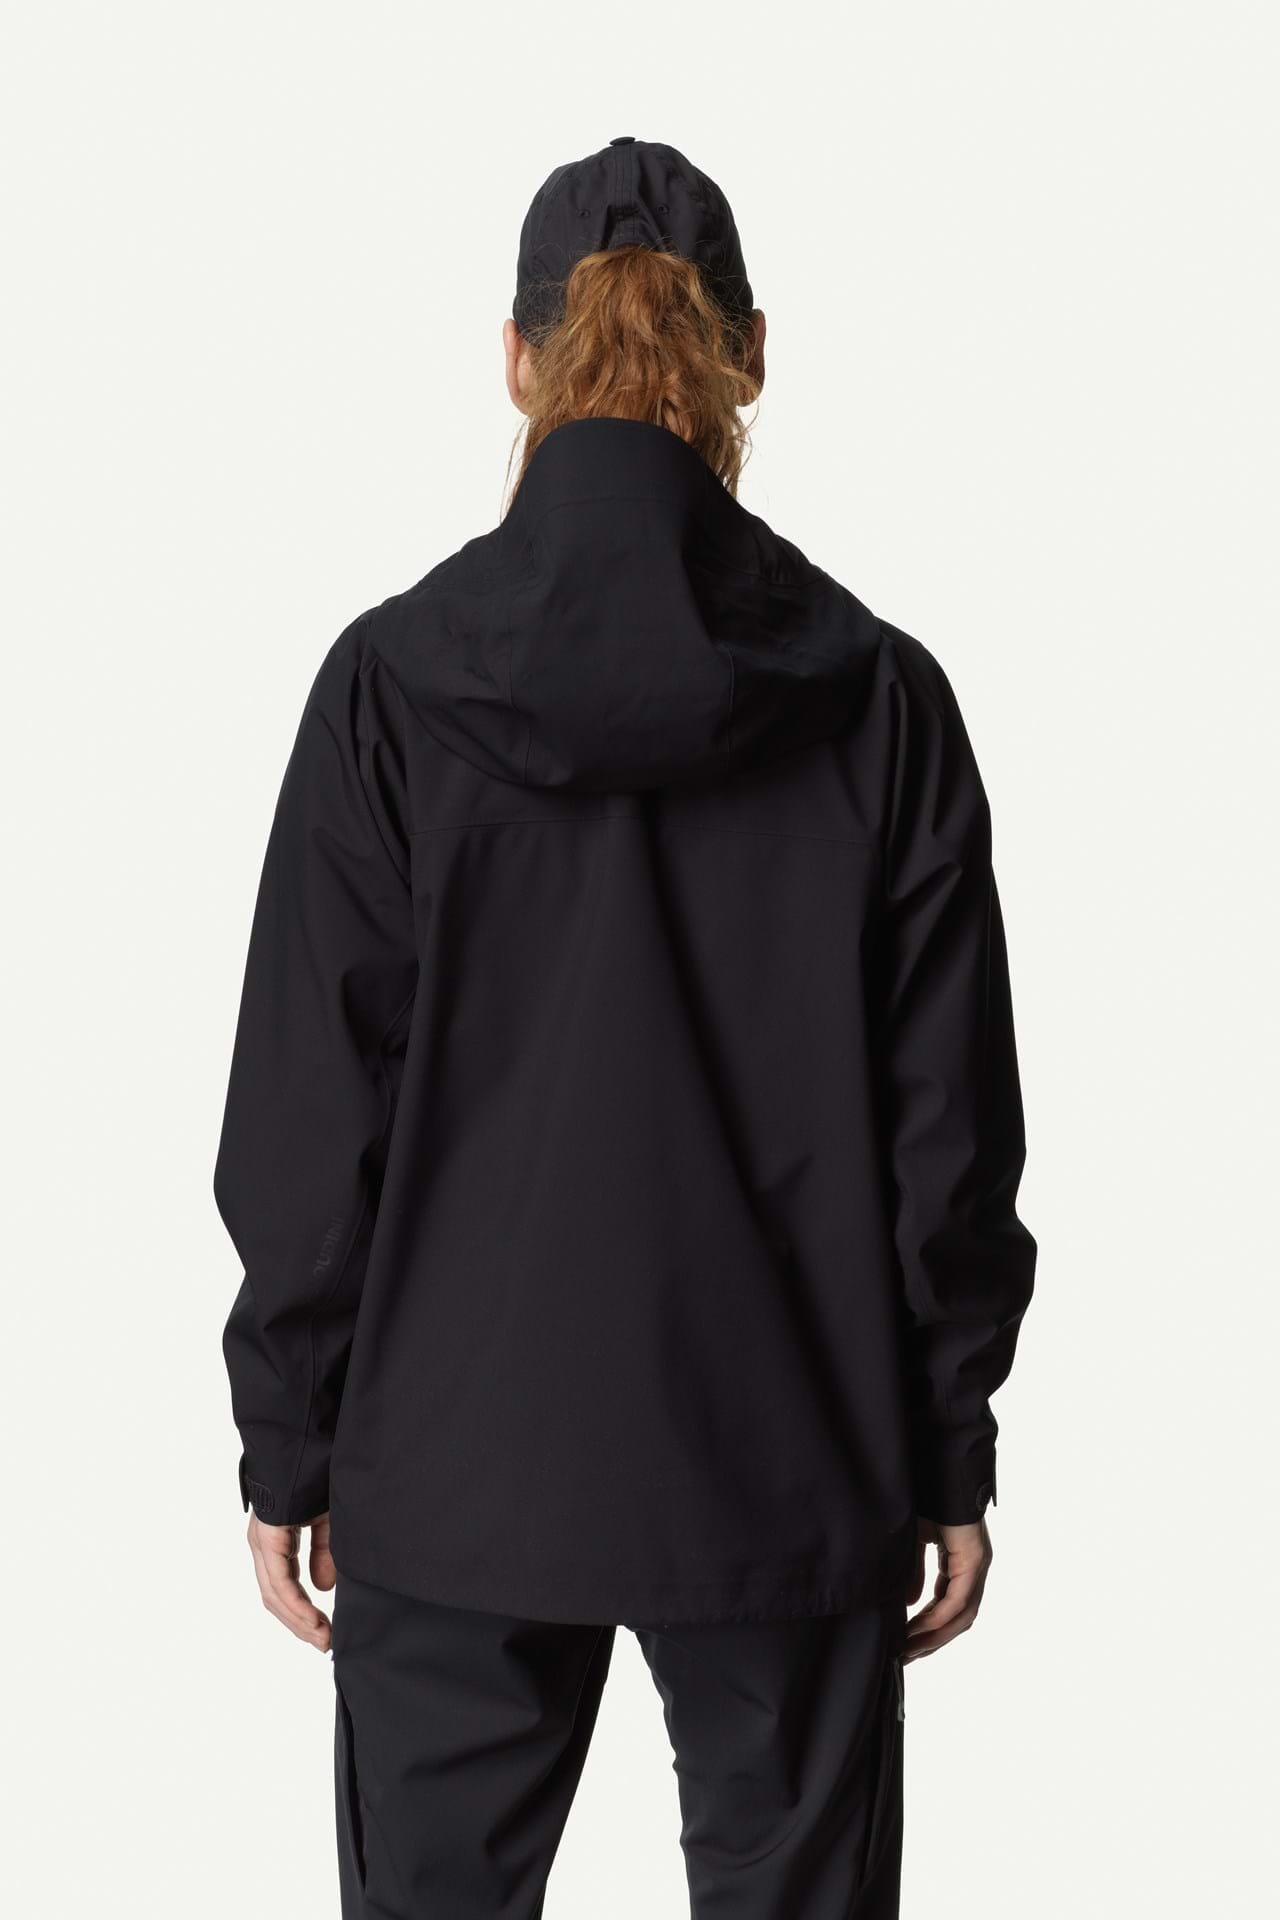 Houdini - W's Shelter Anorak Shell Jacket - Recycled Polyester - Weekendbee - sustainable sportswear